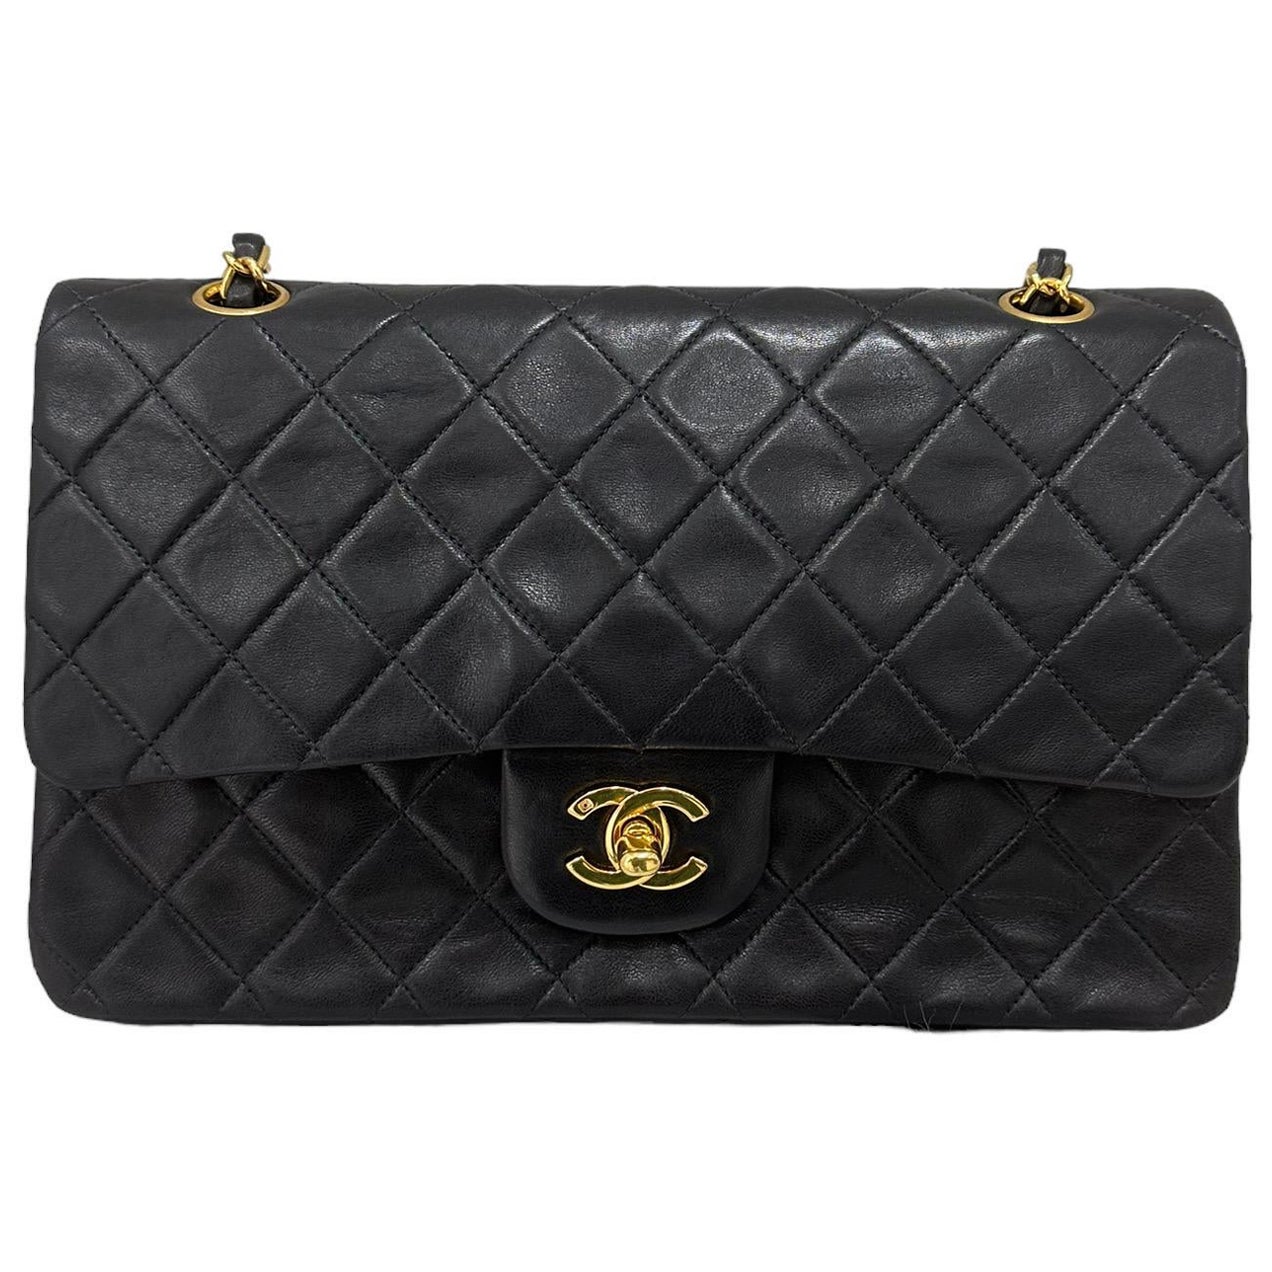 1996 Chanel Timeless Classic 2.55 Black Leather Top Shoulder Bag For Sale